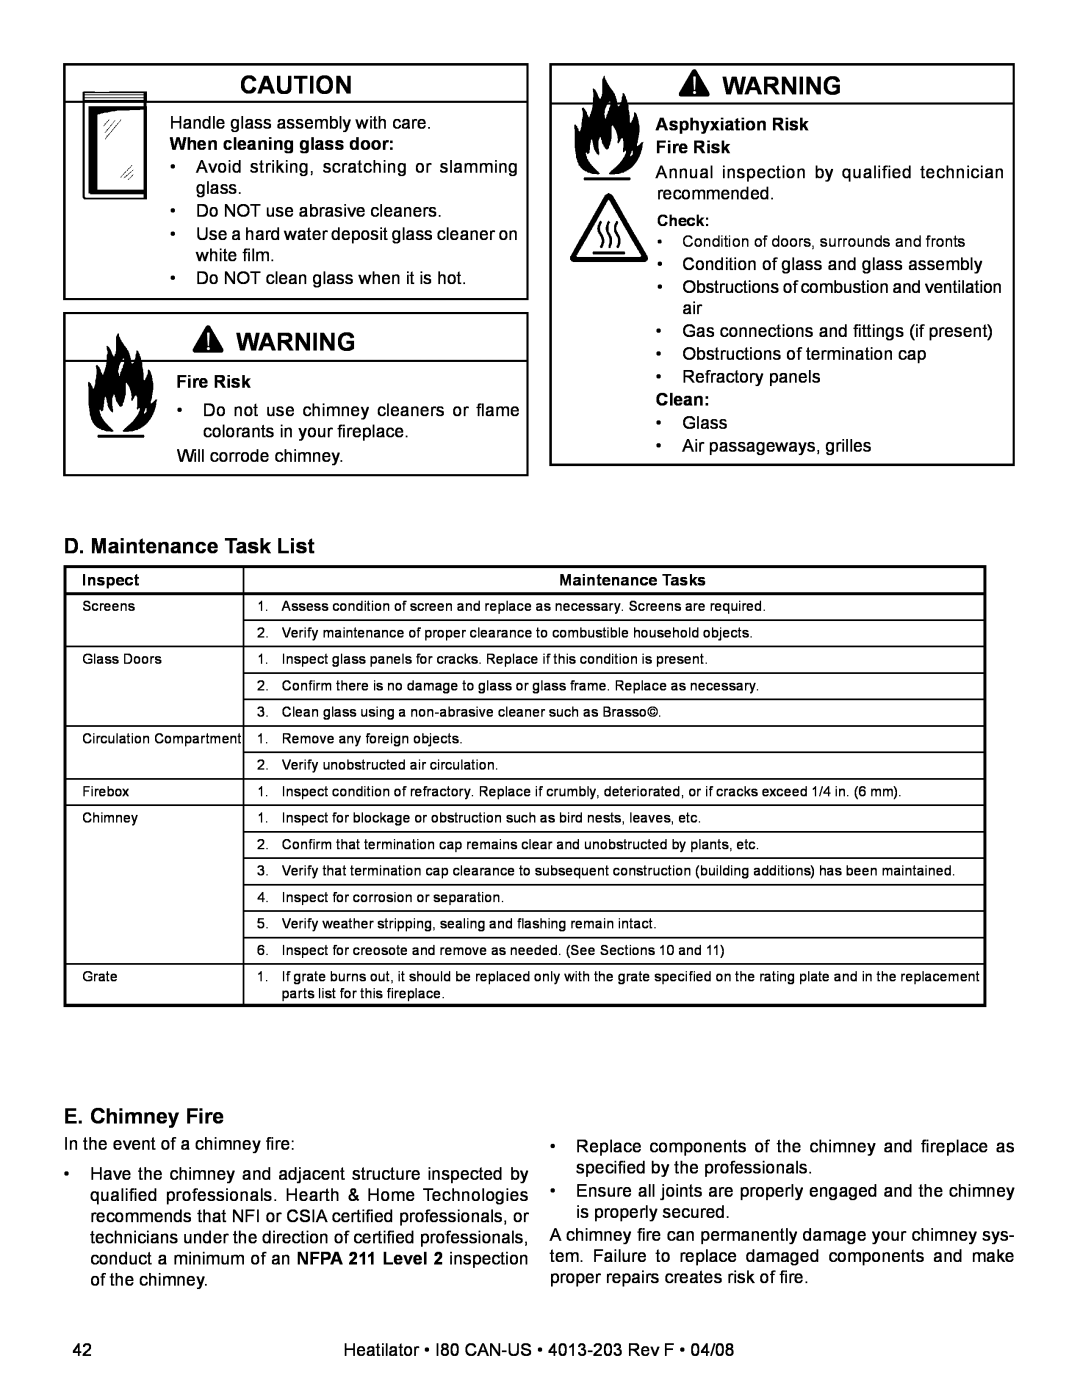 Heatiator I80 D. Maintenance Task List, E. Chimney Fire, When cleaning glass door, Asphyxiation Risk Fire Risk, Clean 